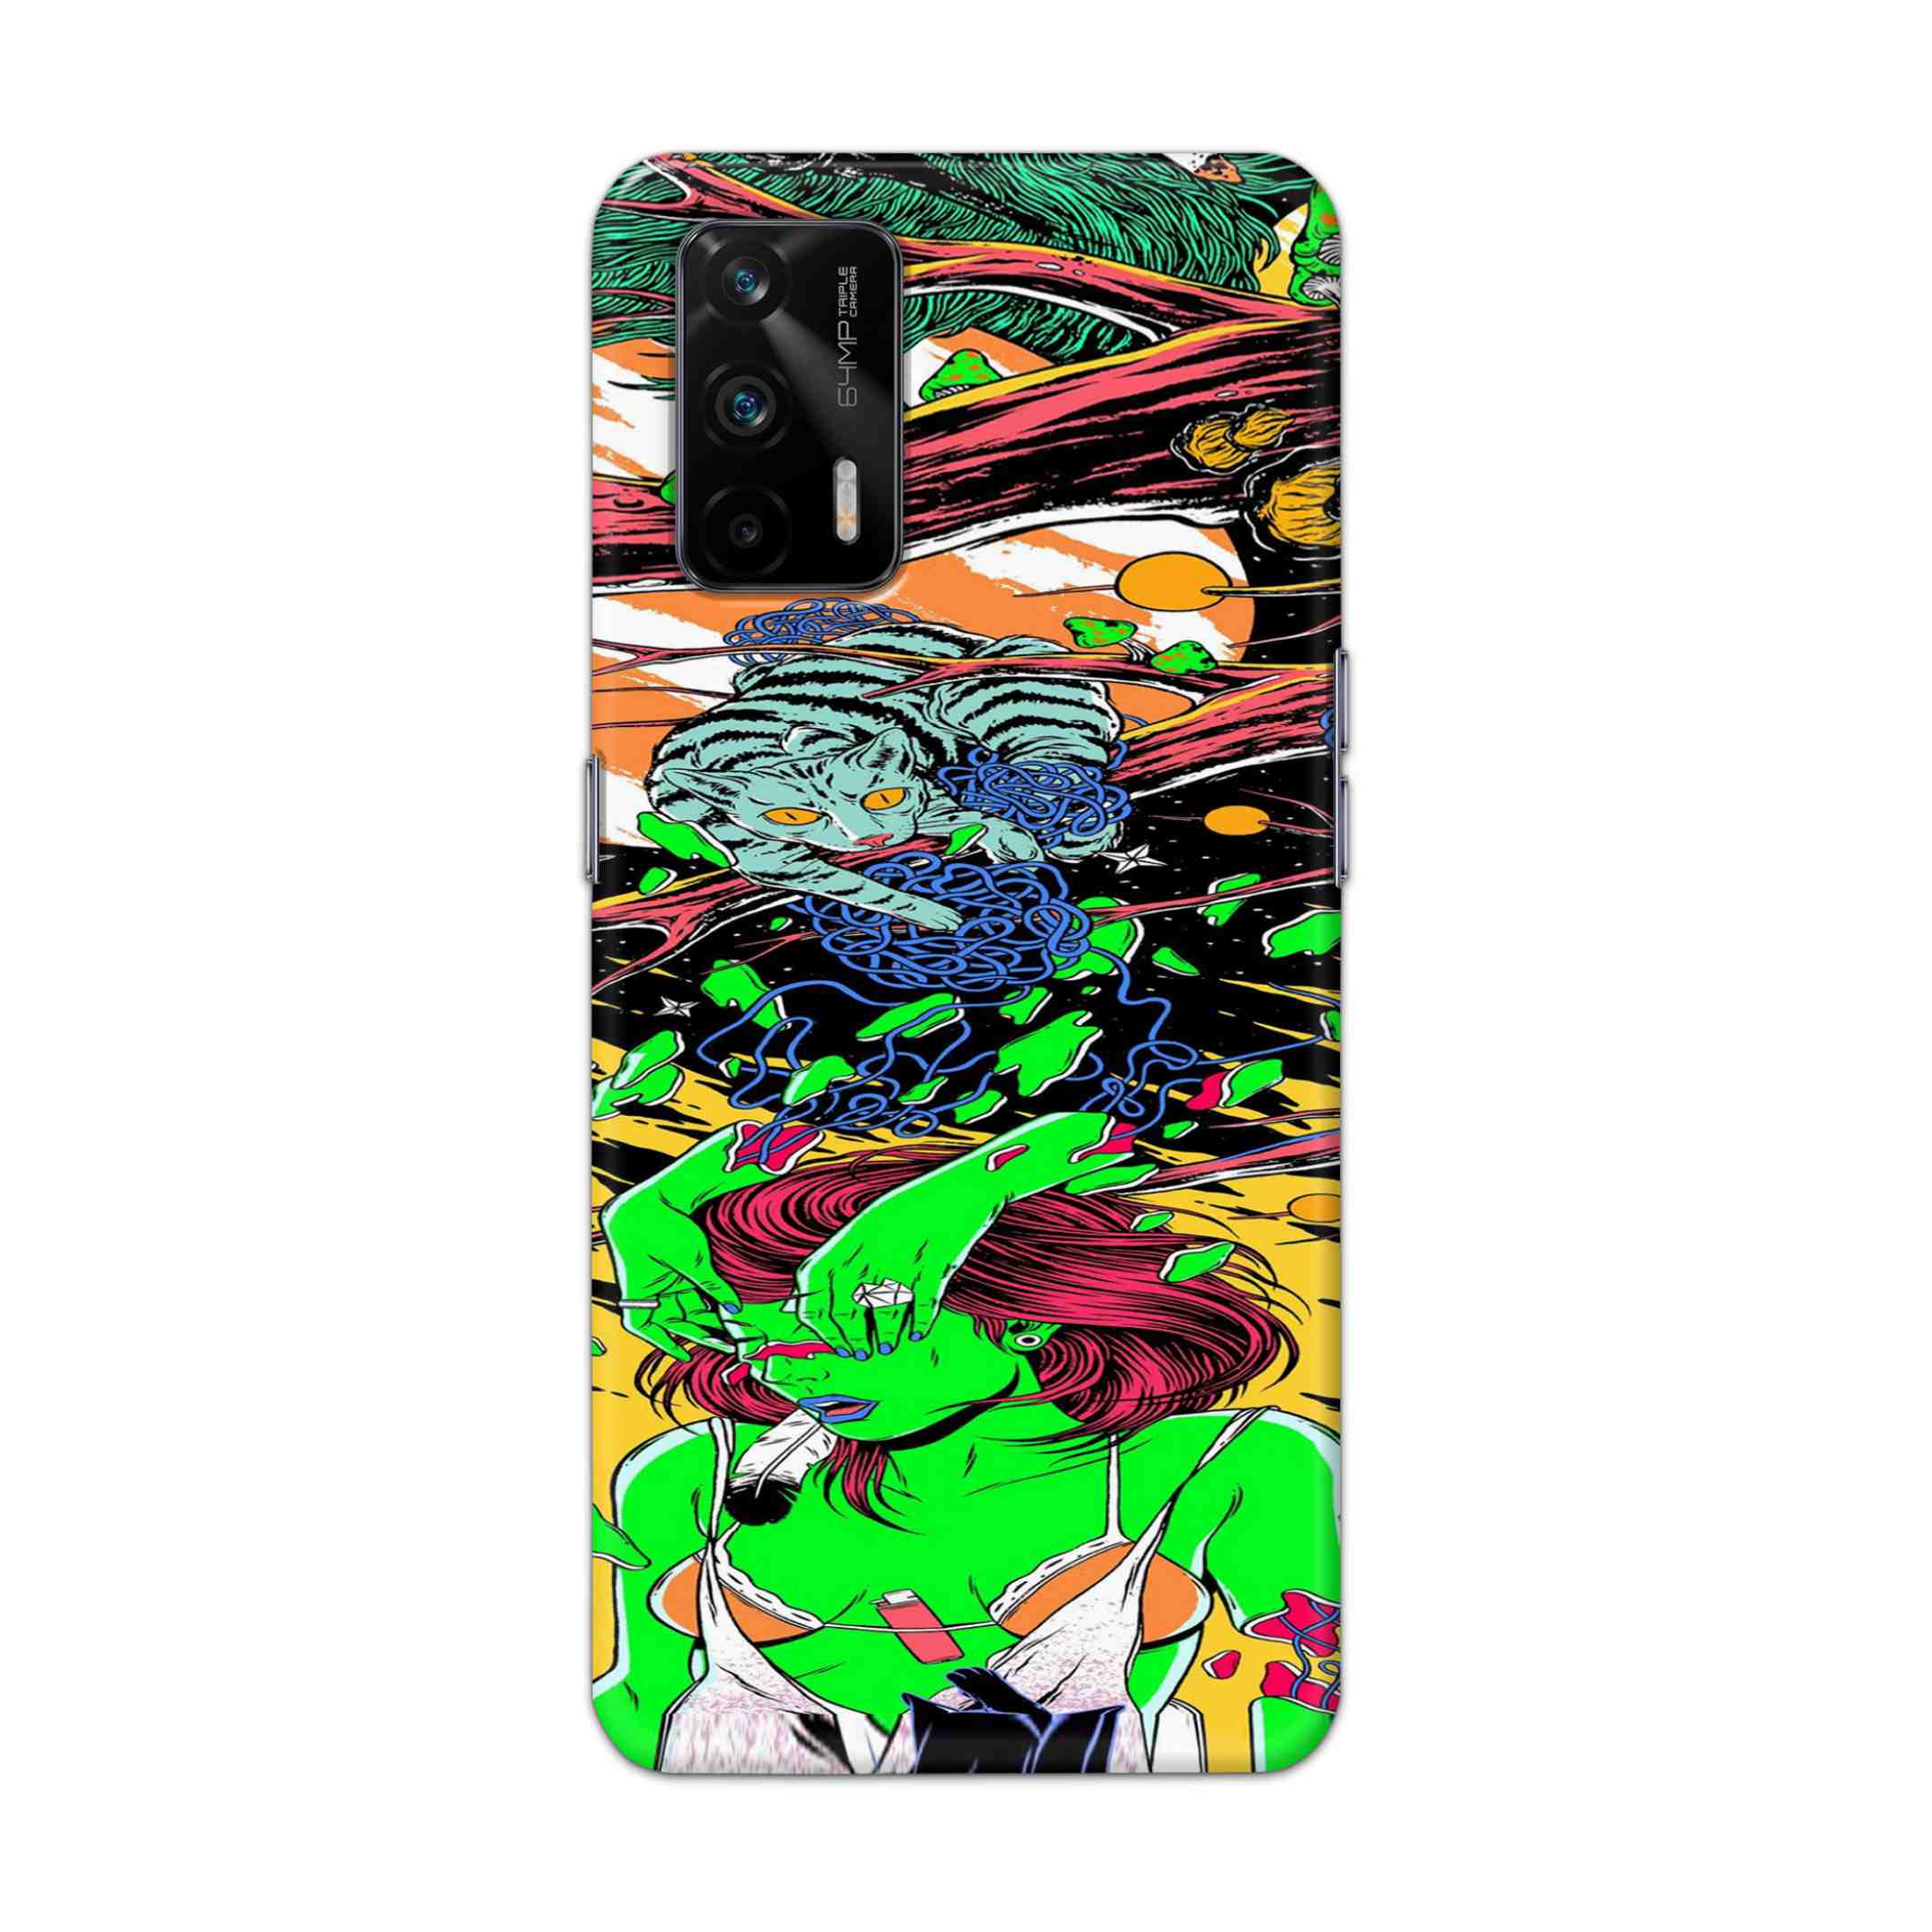 Buy Green Girl Art Hard Back Mobile Phone Case Cover For Realme X7 Max Online